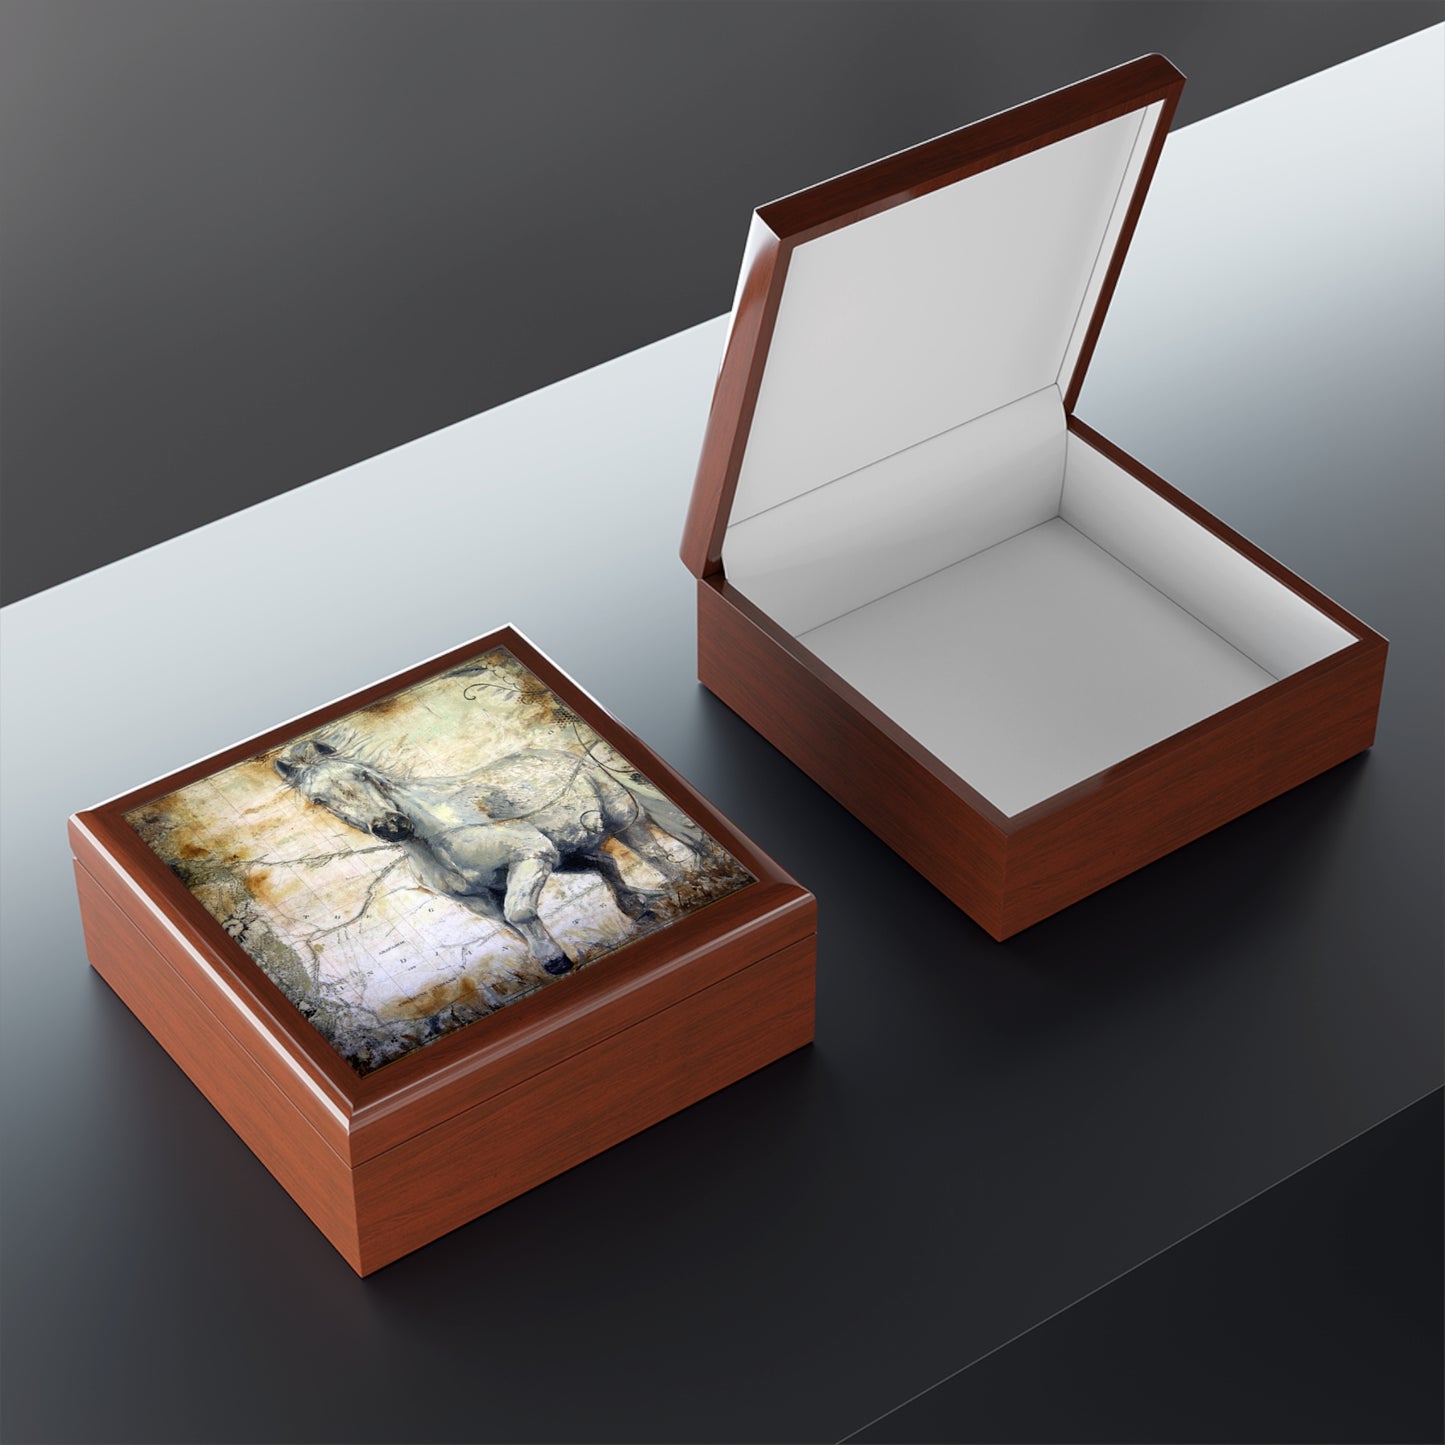 Jewelry / Keepsake Box - Horse Design -  Lacquered Wood Box felt lined